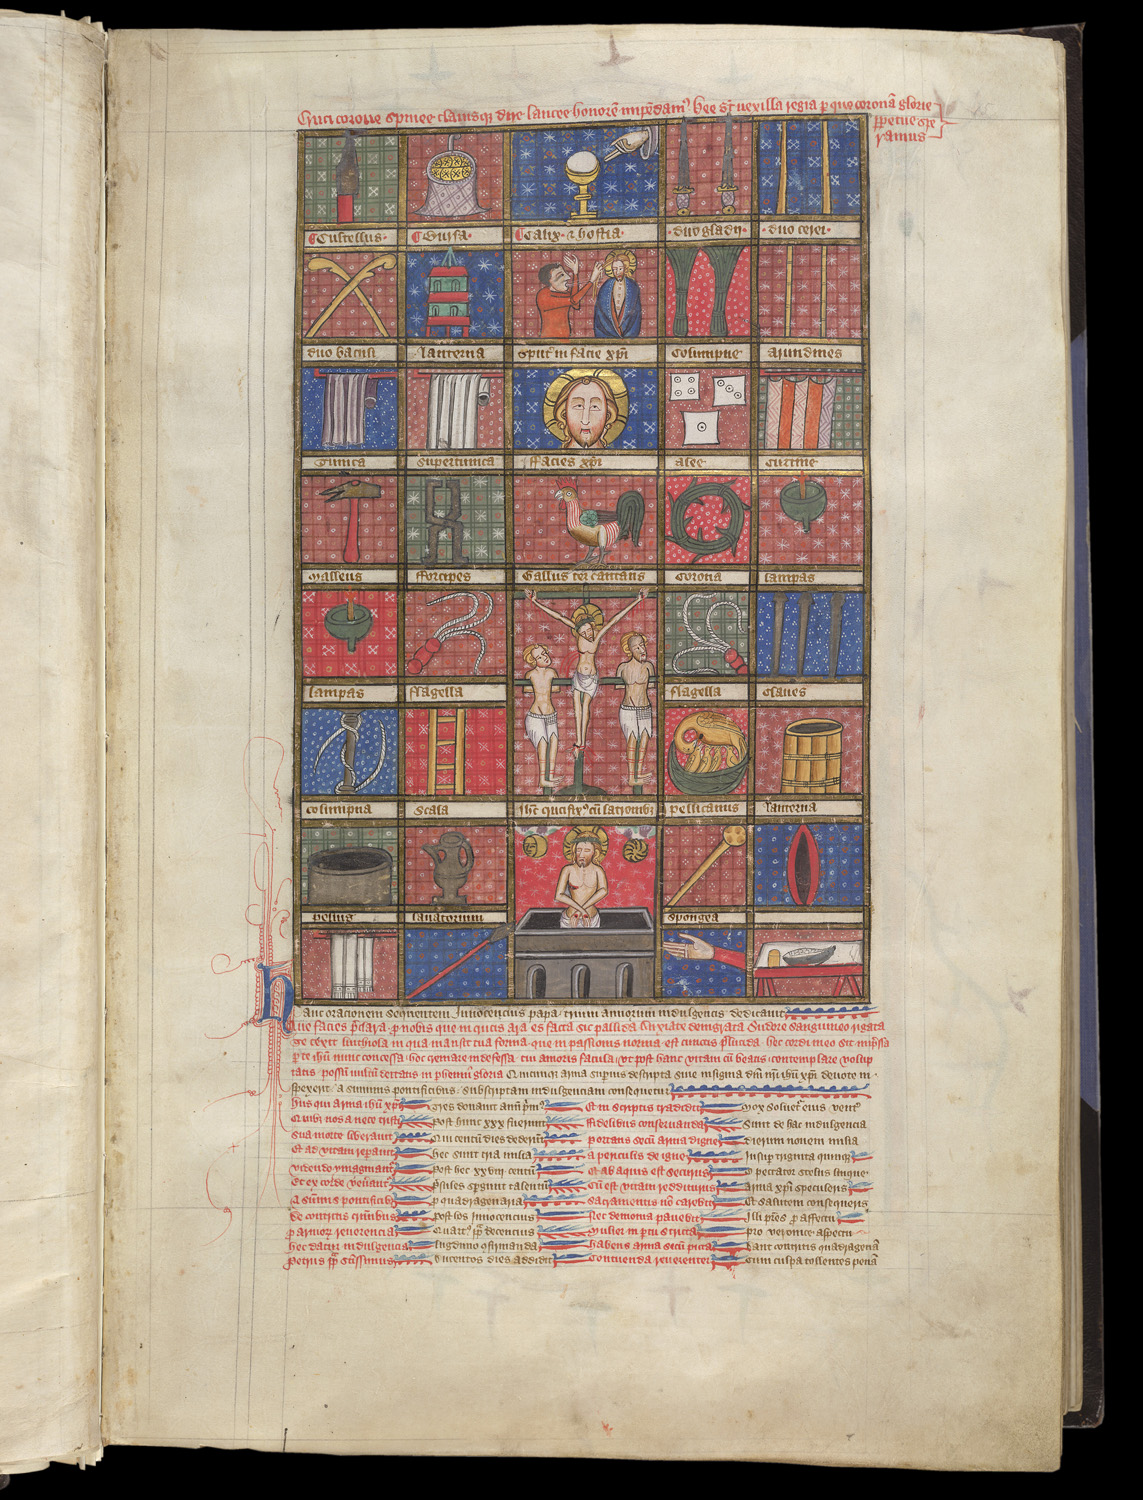 Omne Bonum de James le Palmer, 1360-75, Royal 6 E VI fol 15 detail